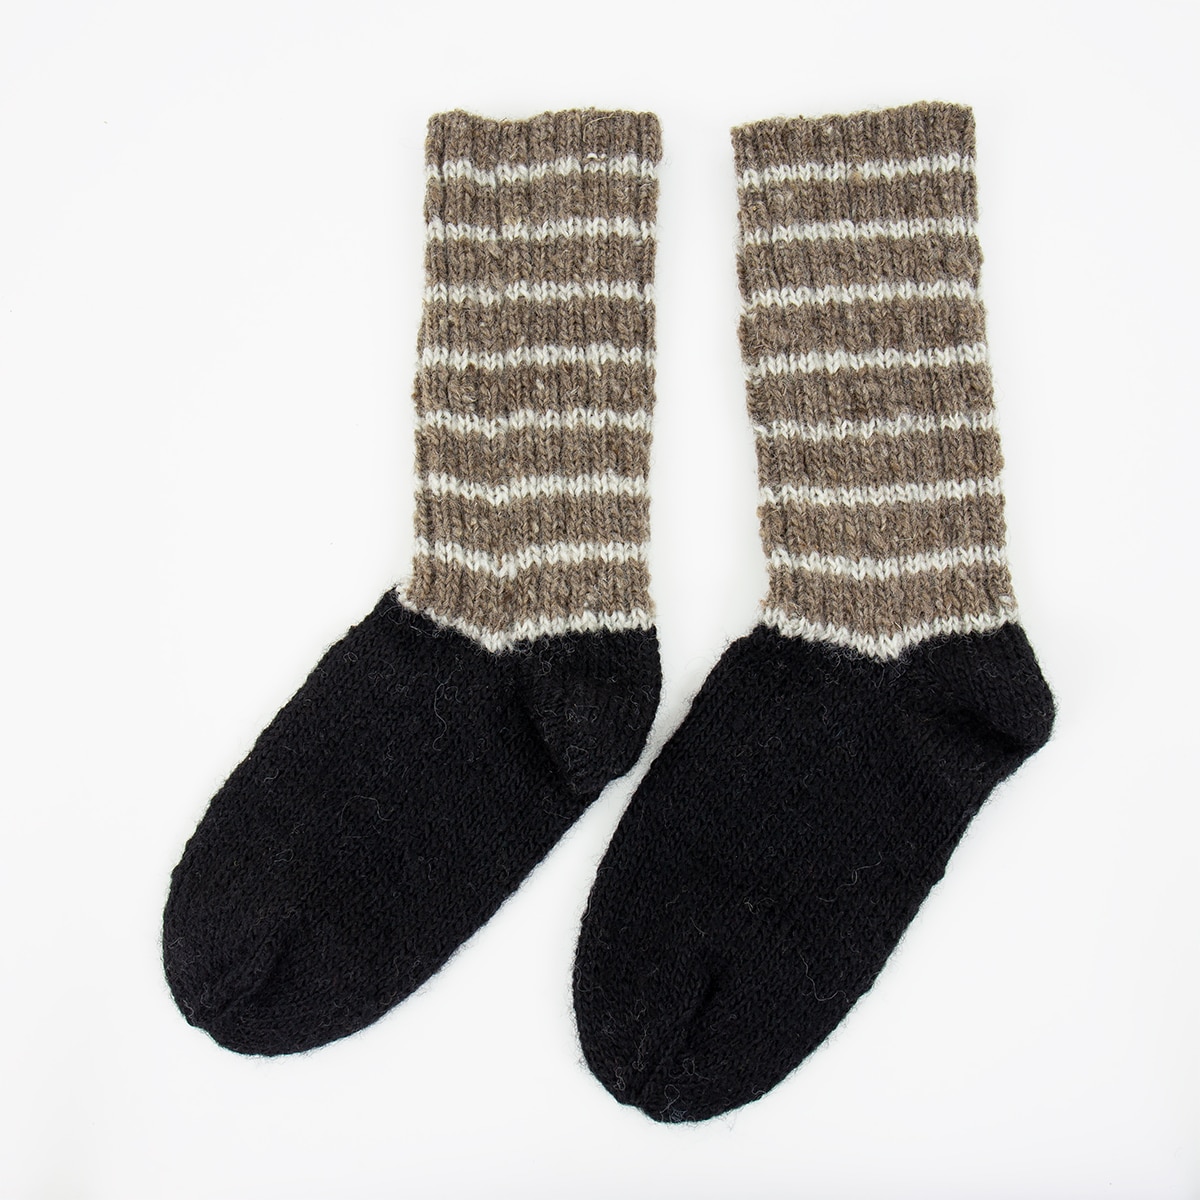 KNITS Socks S, black/brown